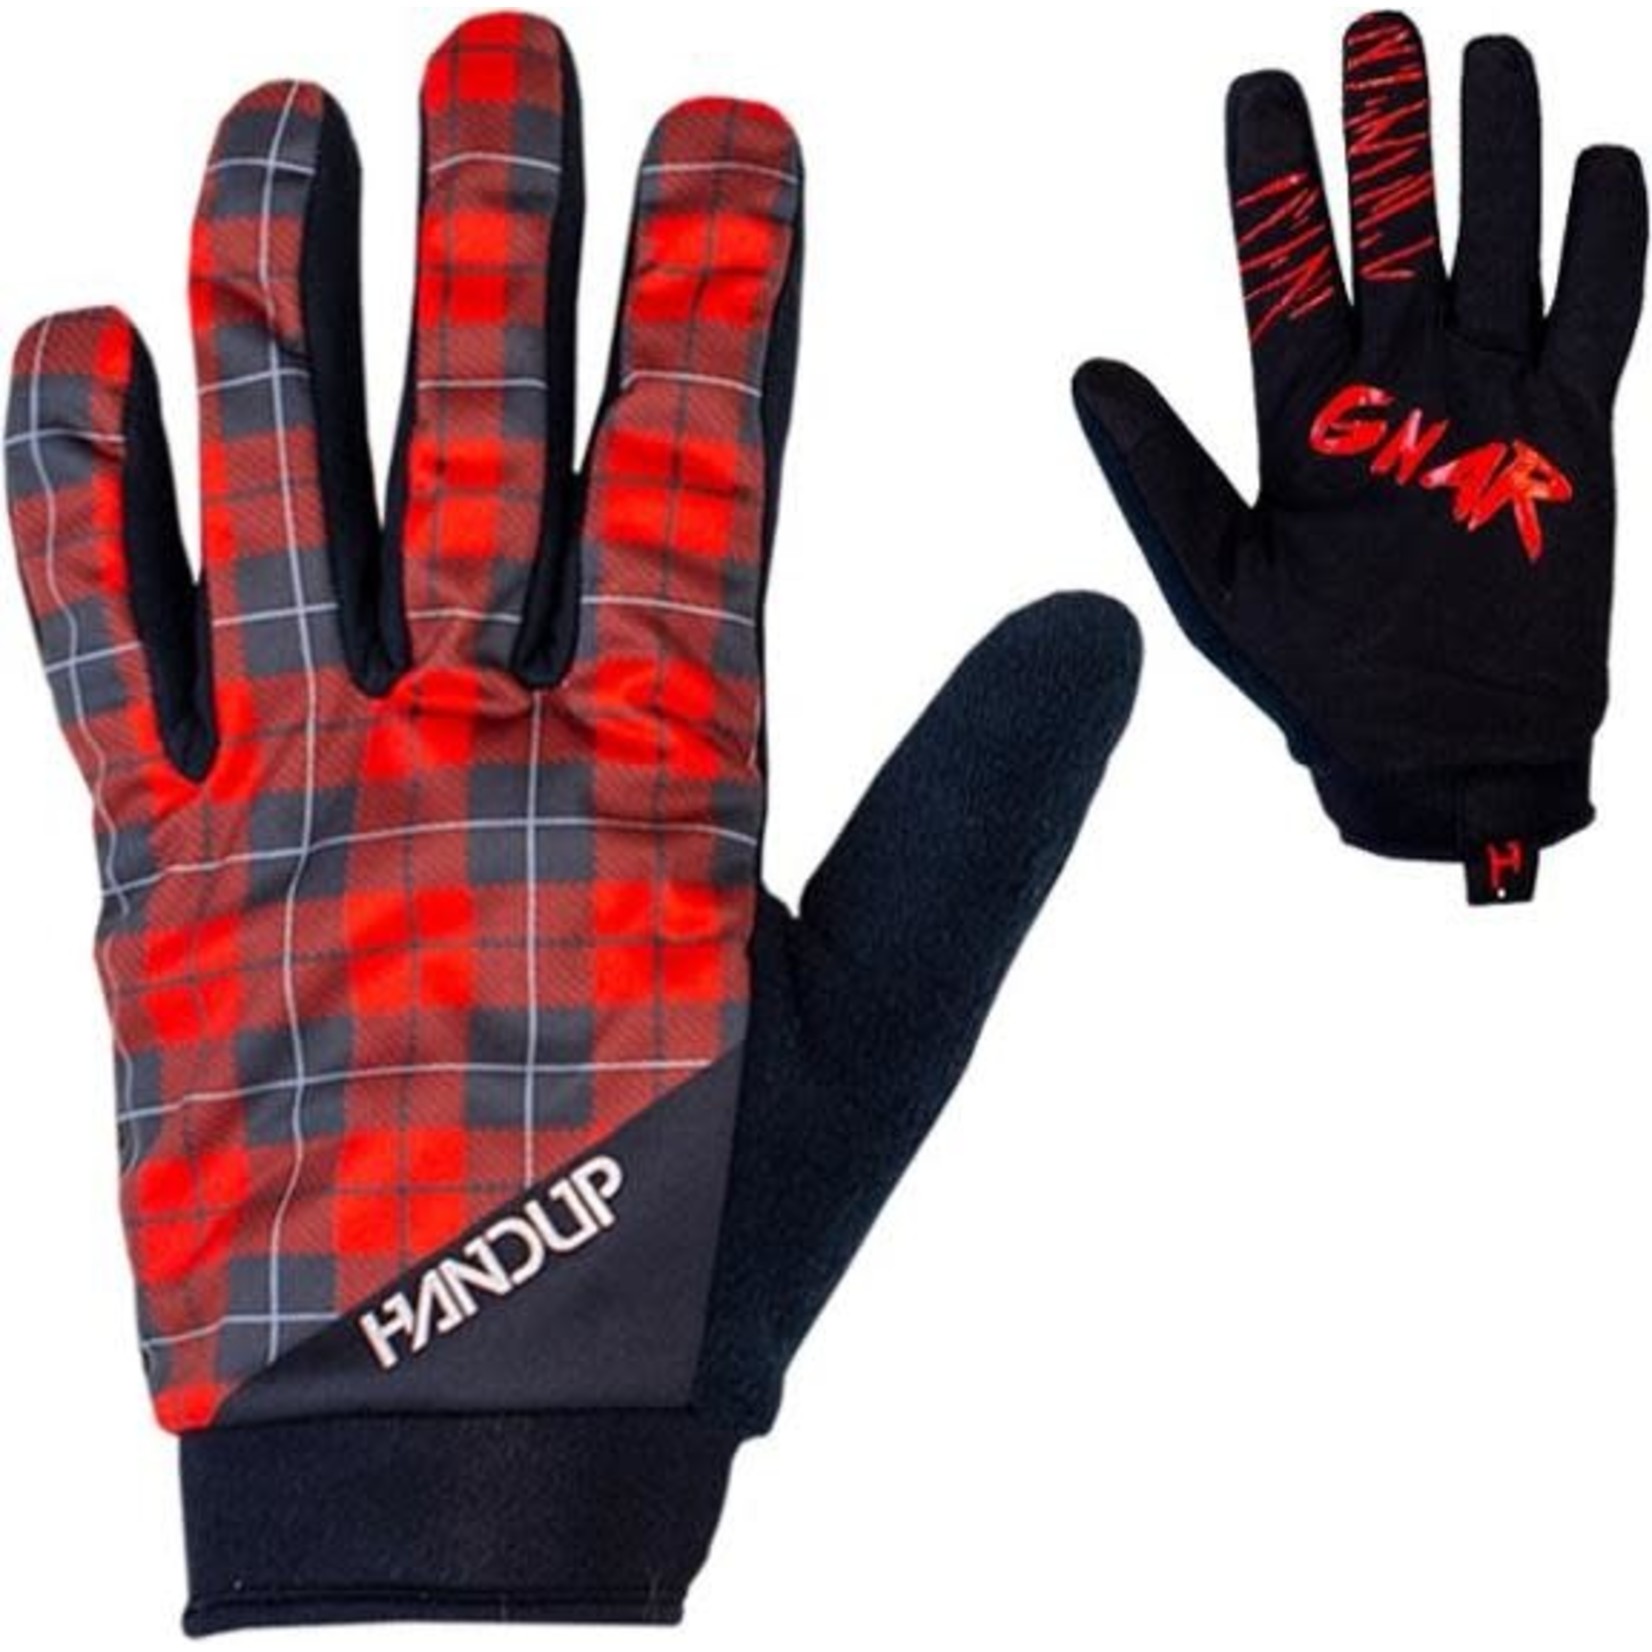 Handup Colder weather red gloves M